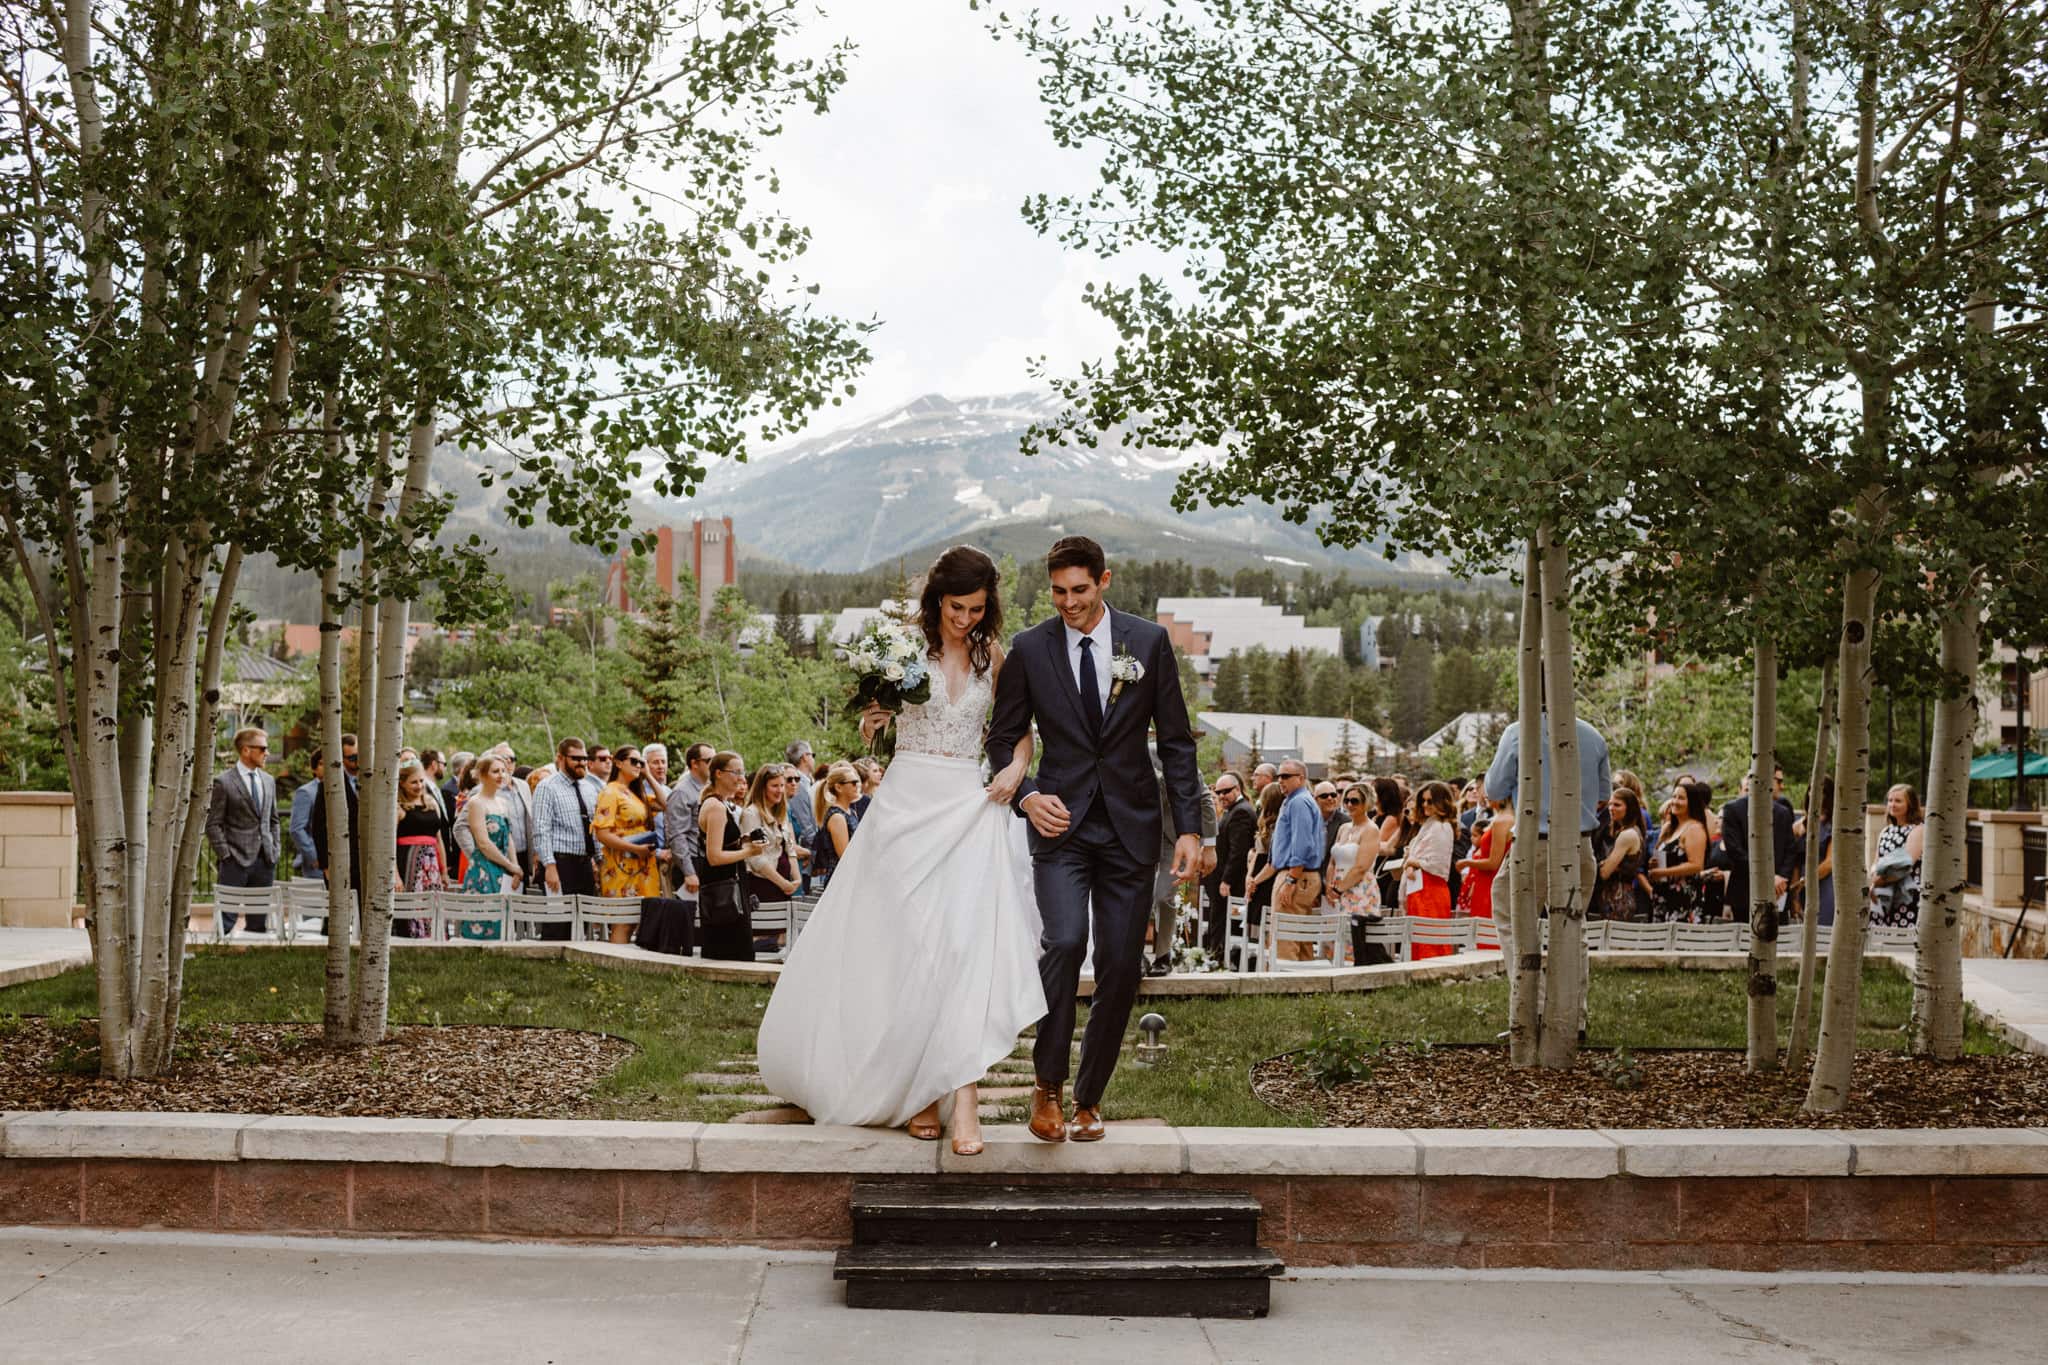 Main Street Station wedding ceremony, Breckenridge Colorado ski resort wedding photographer